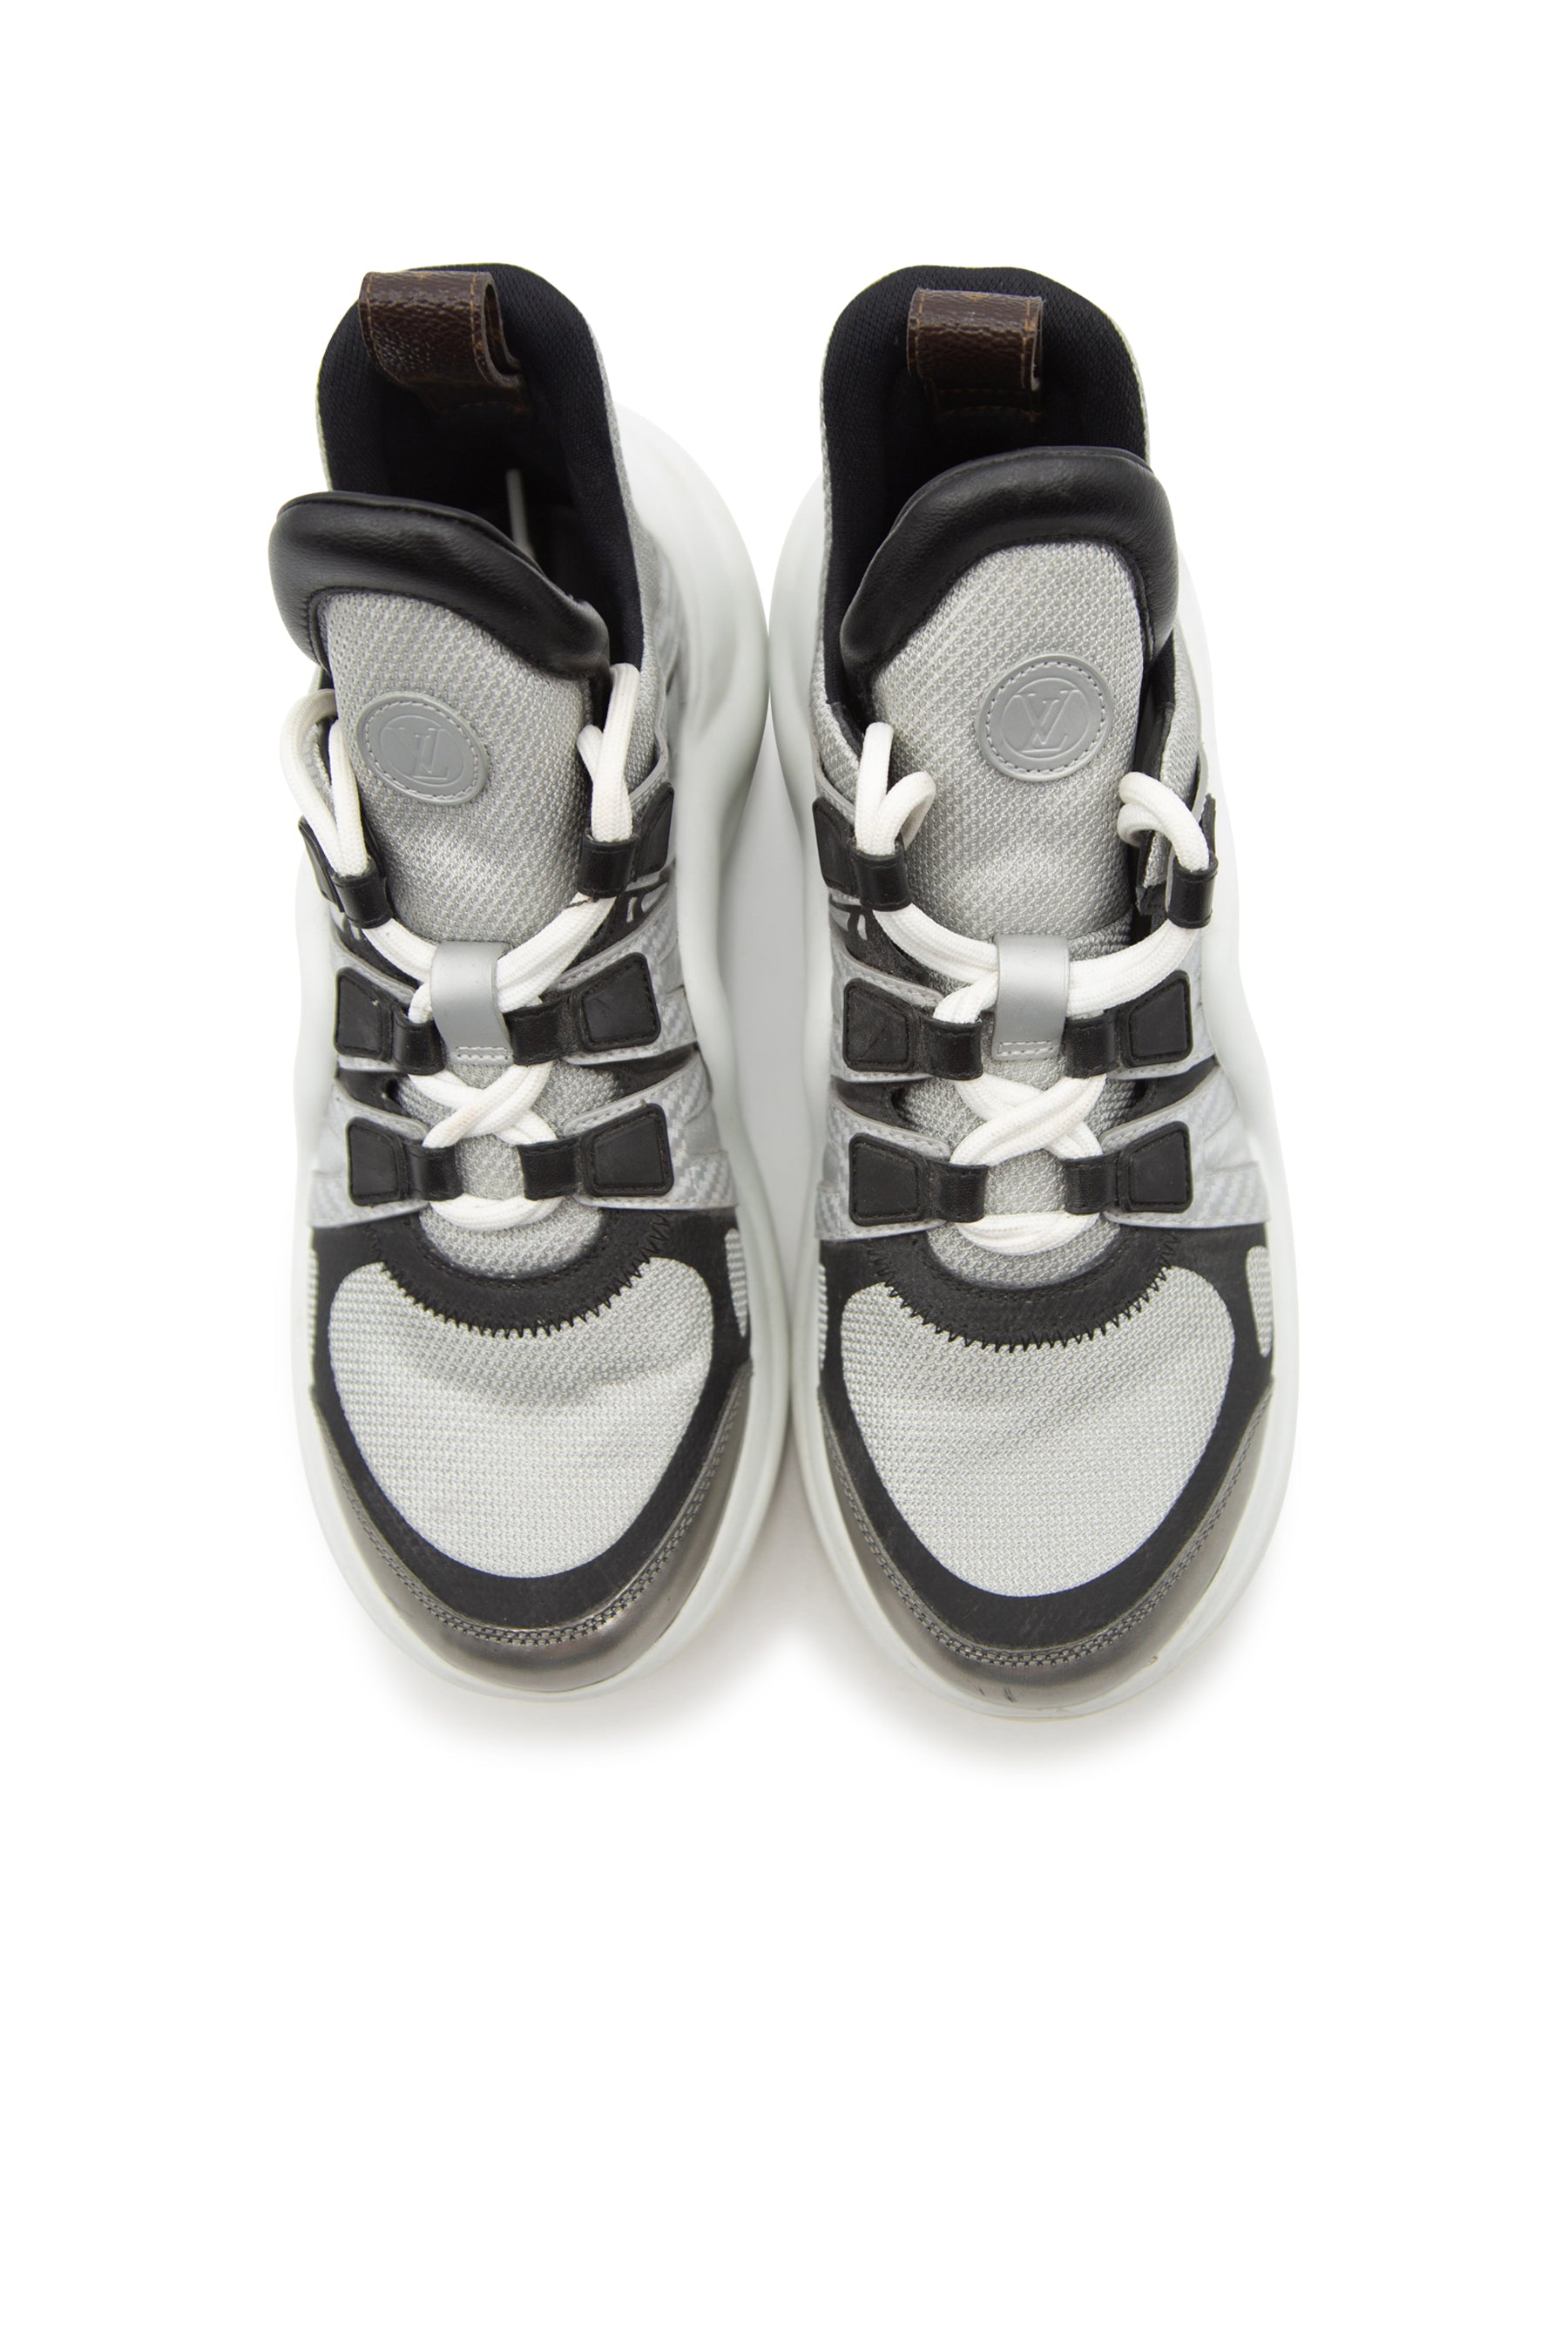 Louis Vuitton, Shoes, Louis Vuitton Archlight Chunky White Sneakers 37